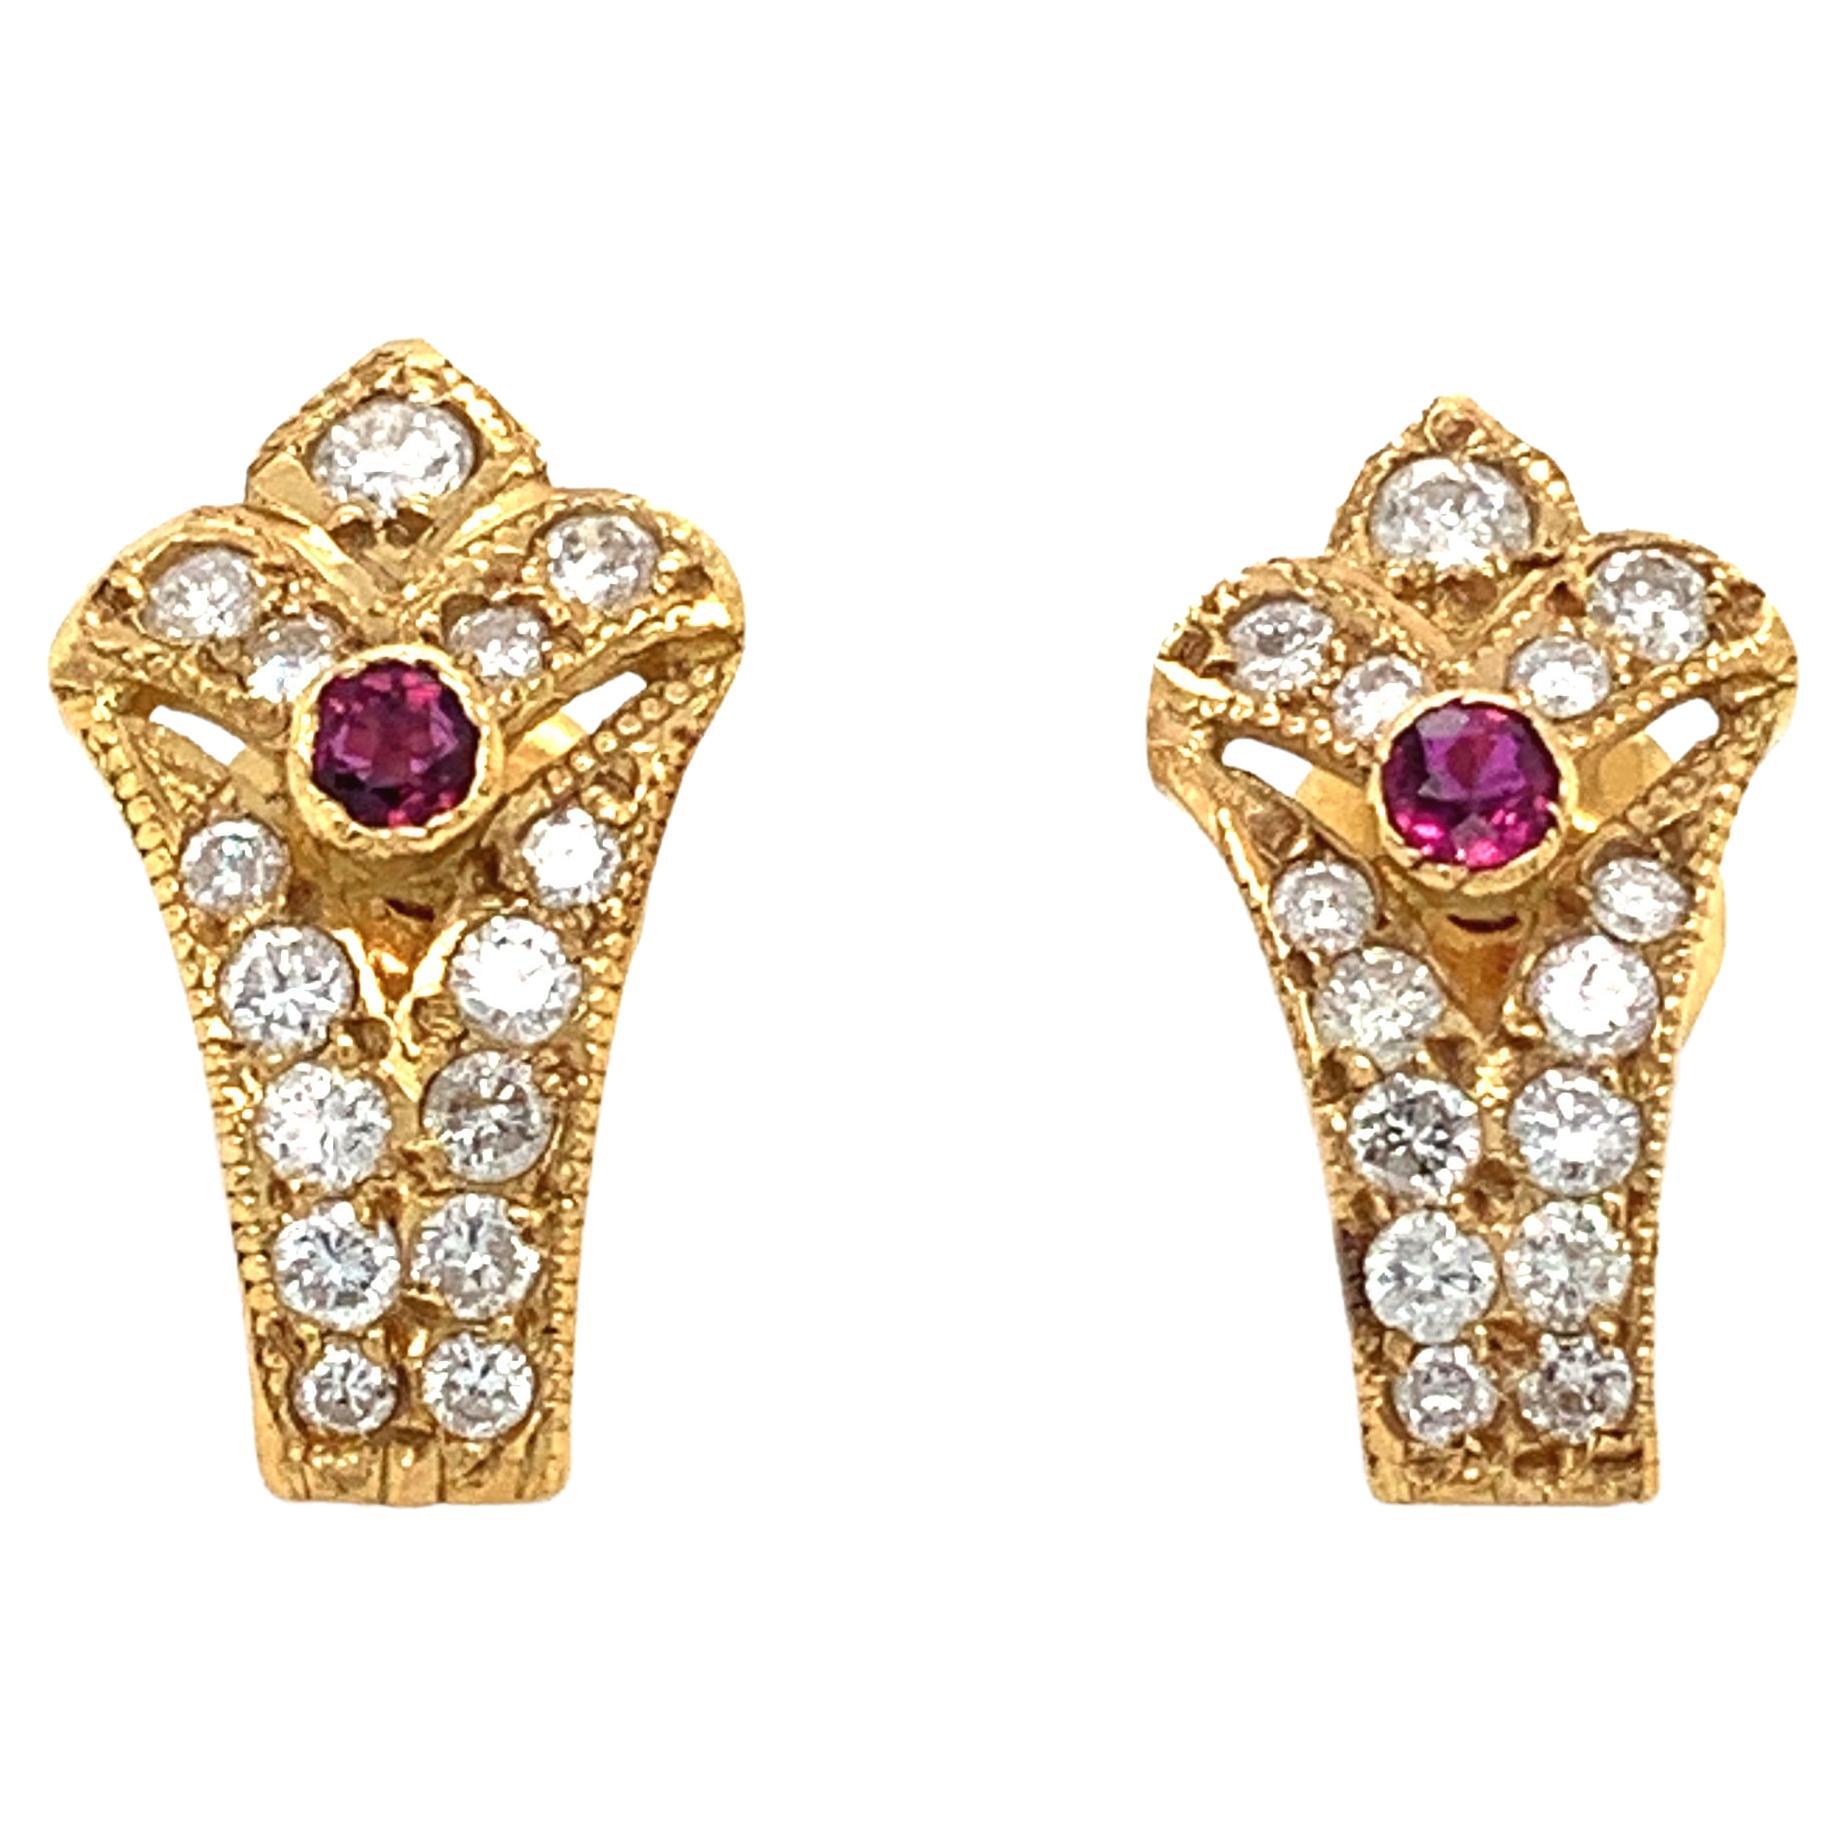 Ruby diamonds art deco studs earrings 18k yellow gold For Sale